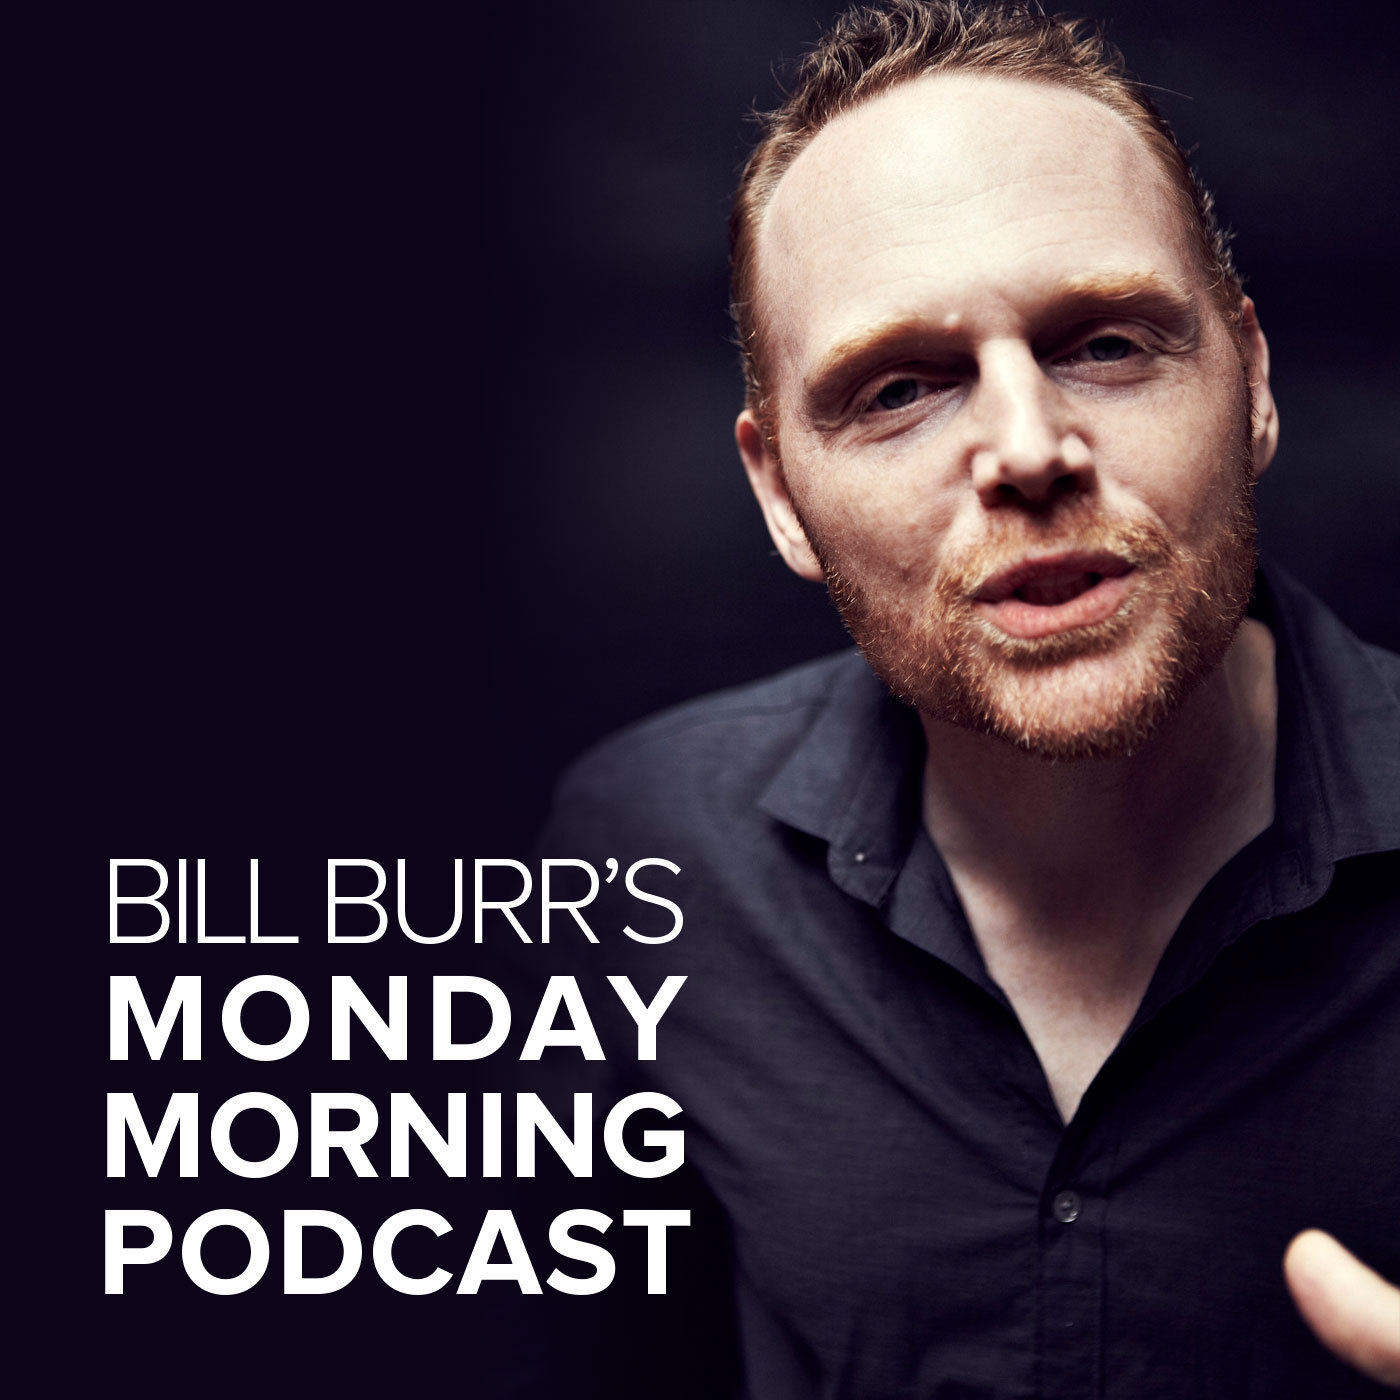 Monday Morning Podcast 7-15-13